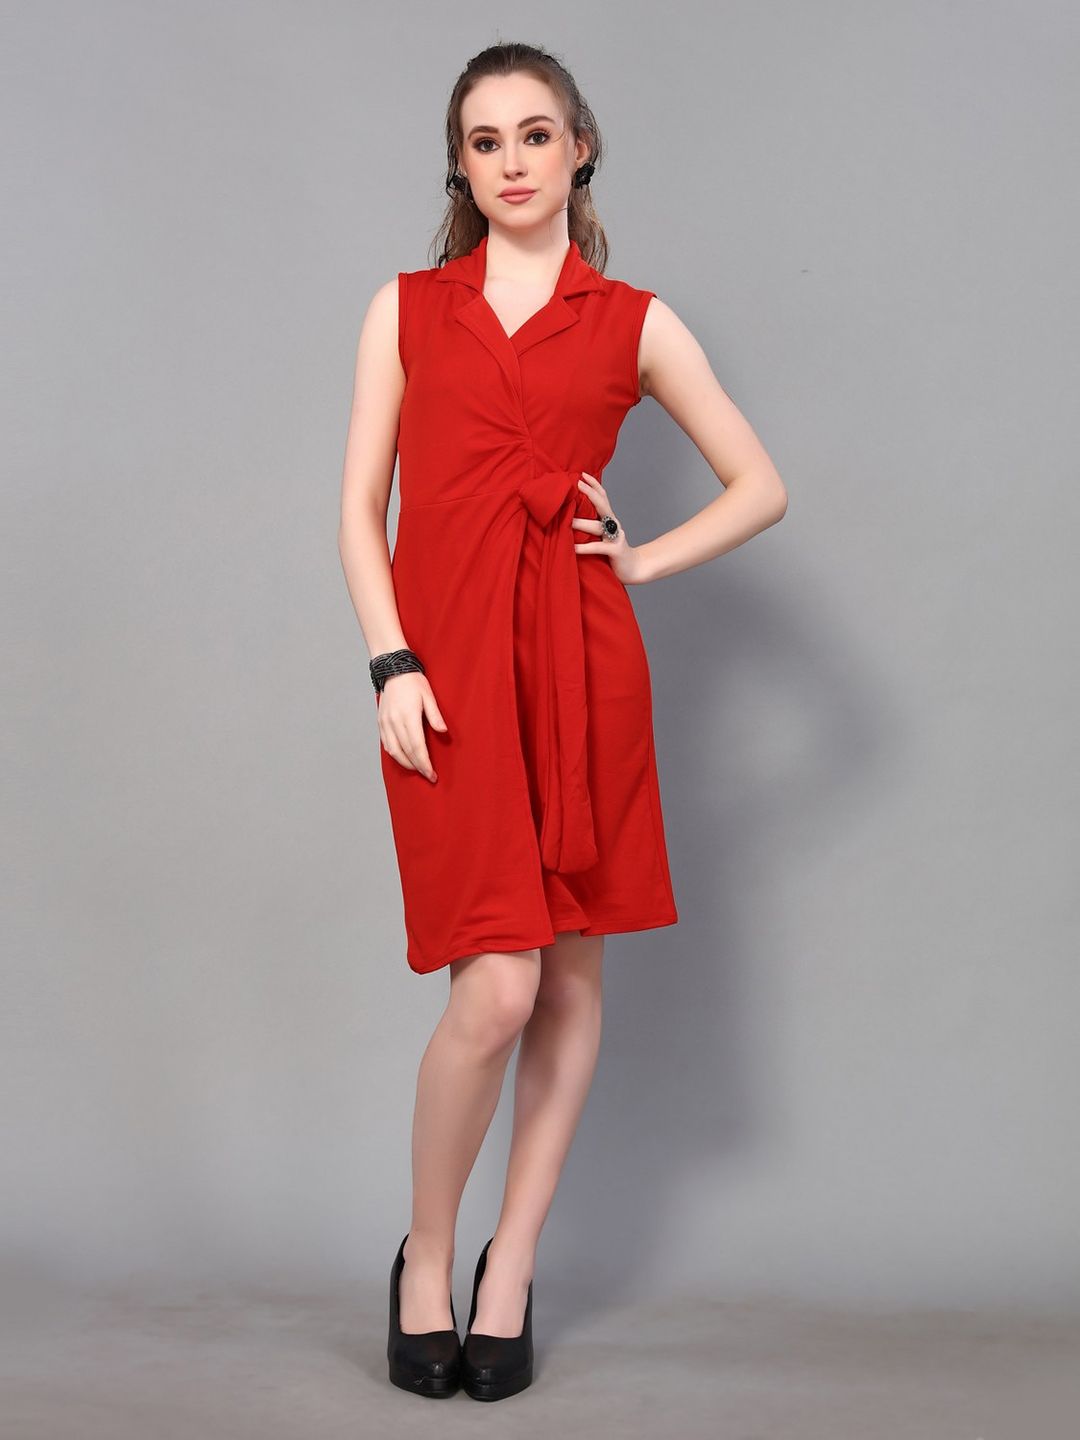 KALINI Red Crepe Dress Price in India